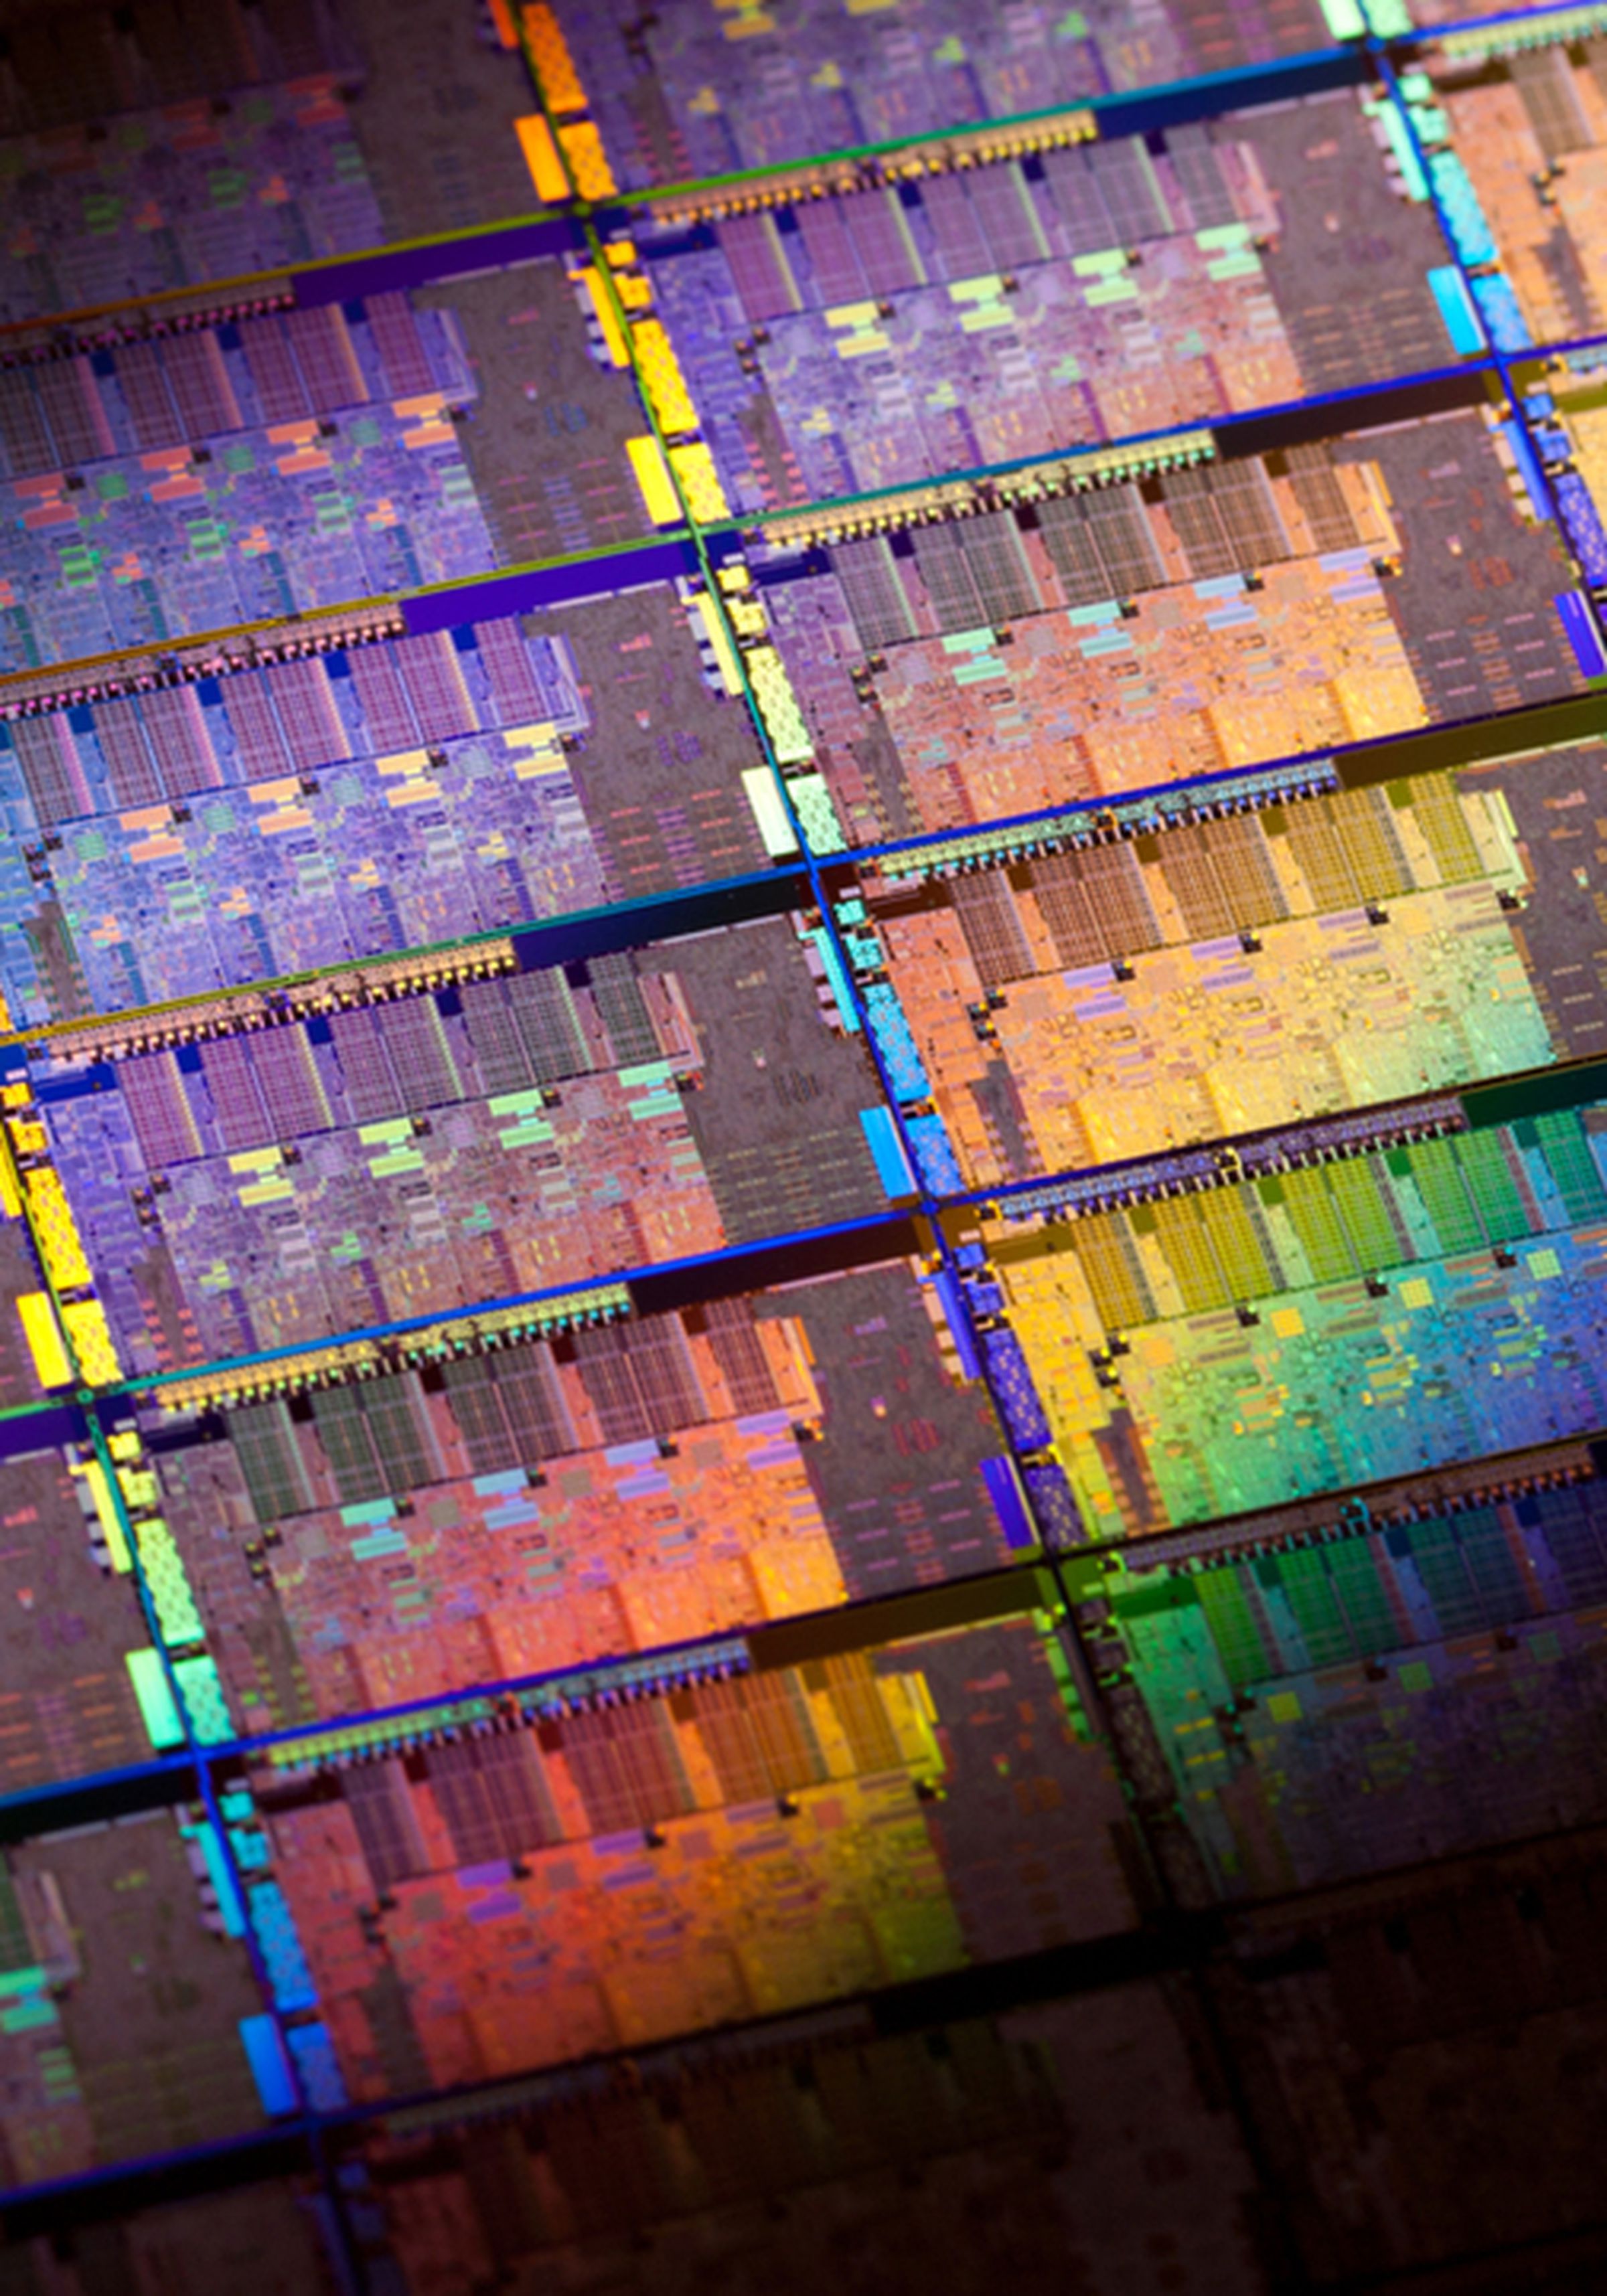 Intel Sandy Bridge Chips